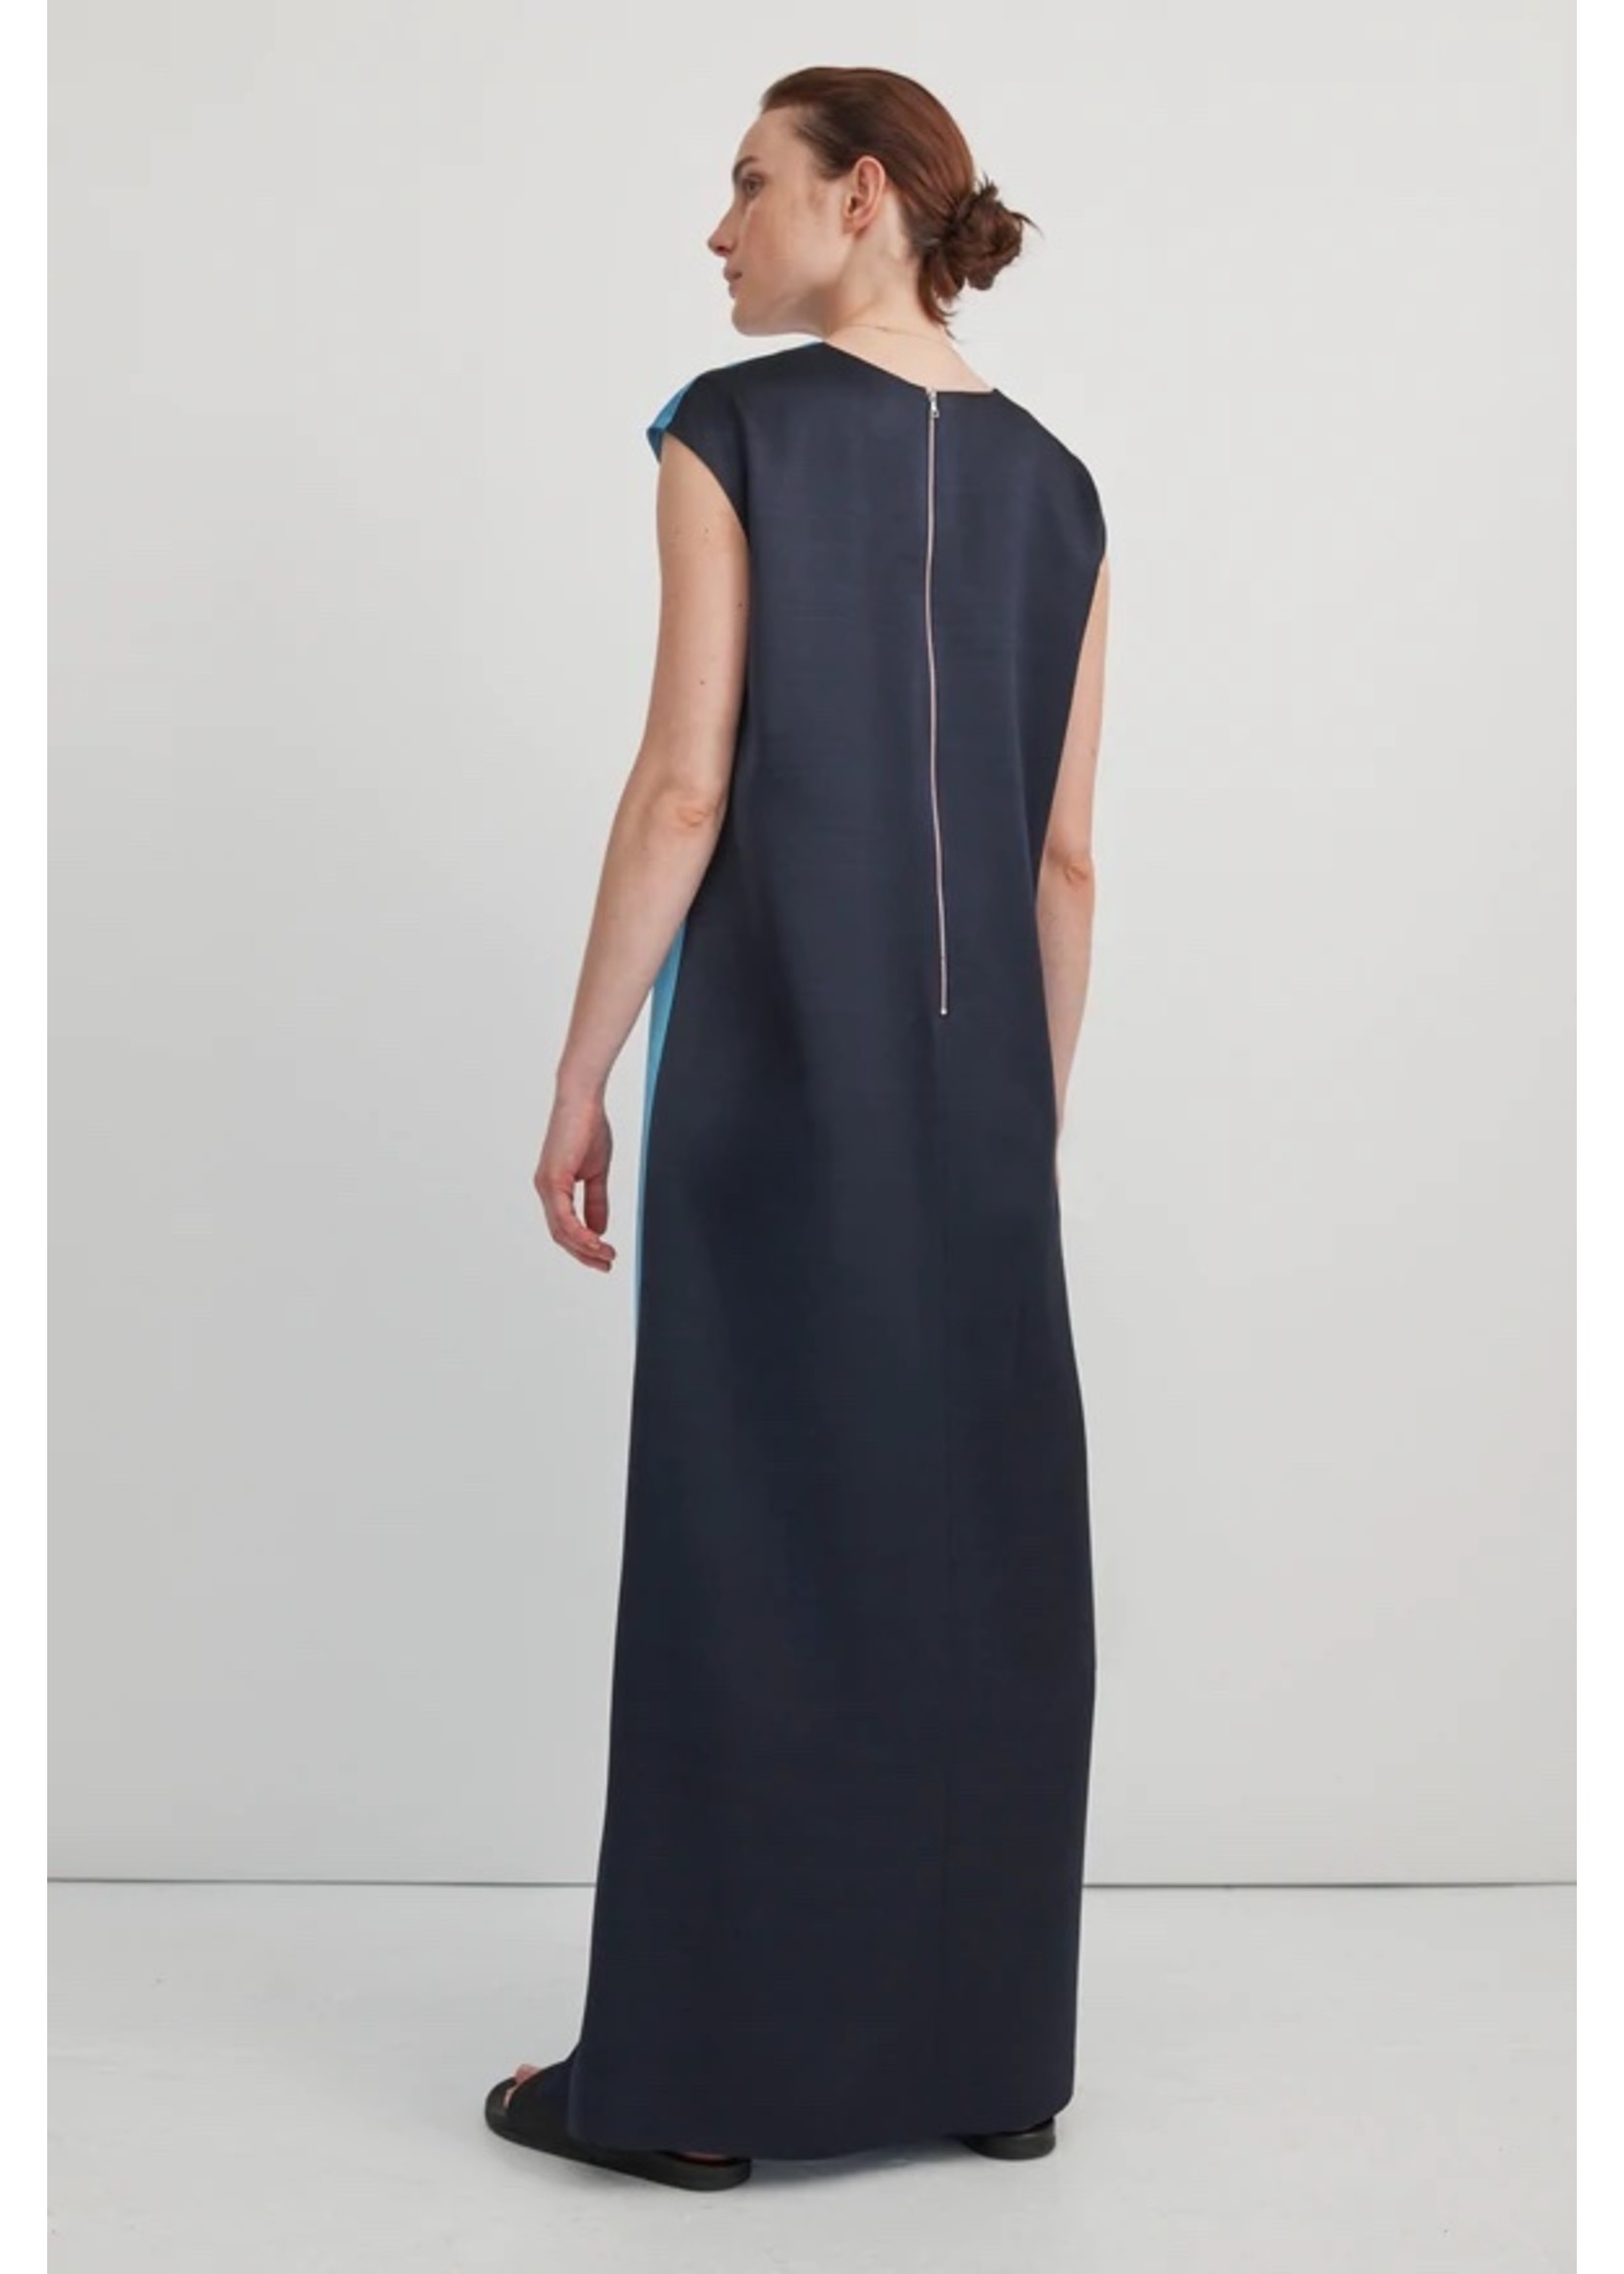 PARTOW Sloane Gown